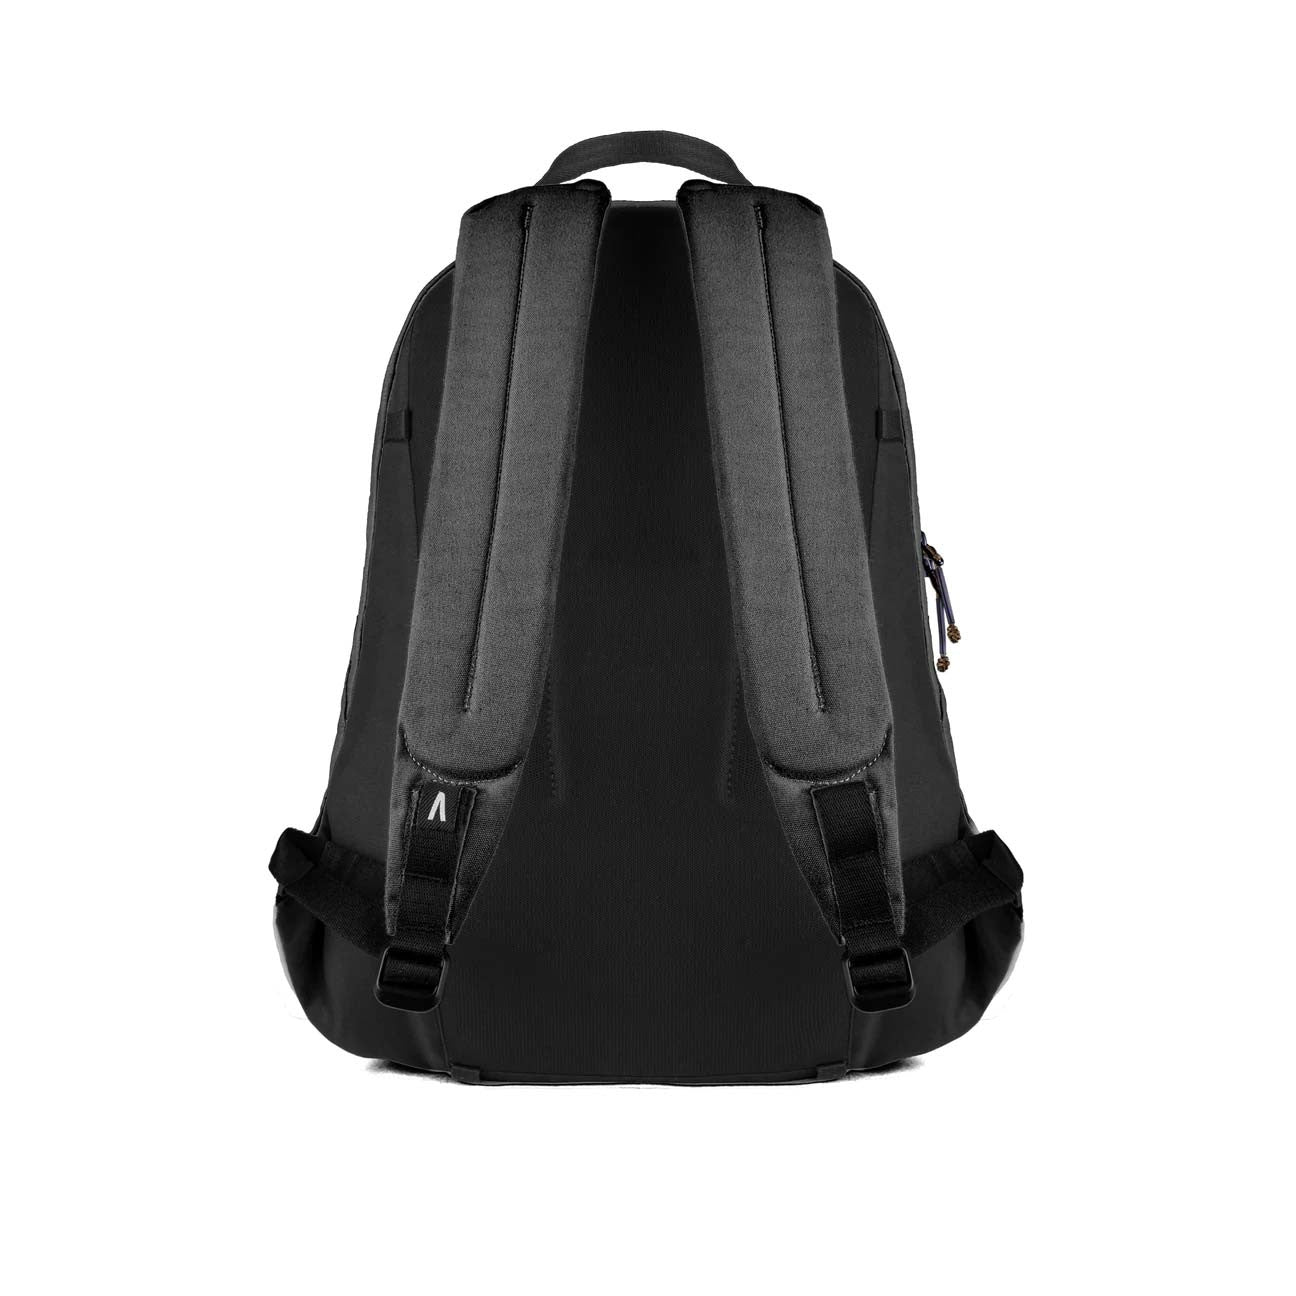 Boundary Supply Rennen Daypack Black backpack straps